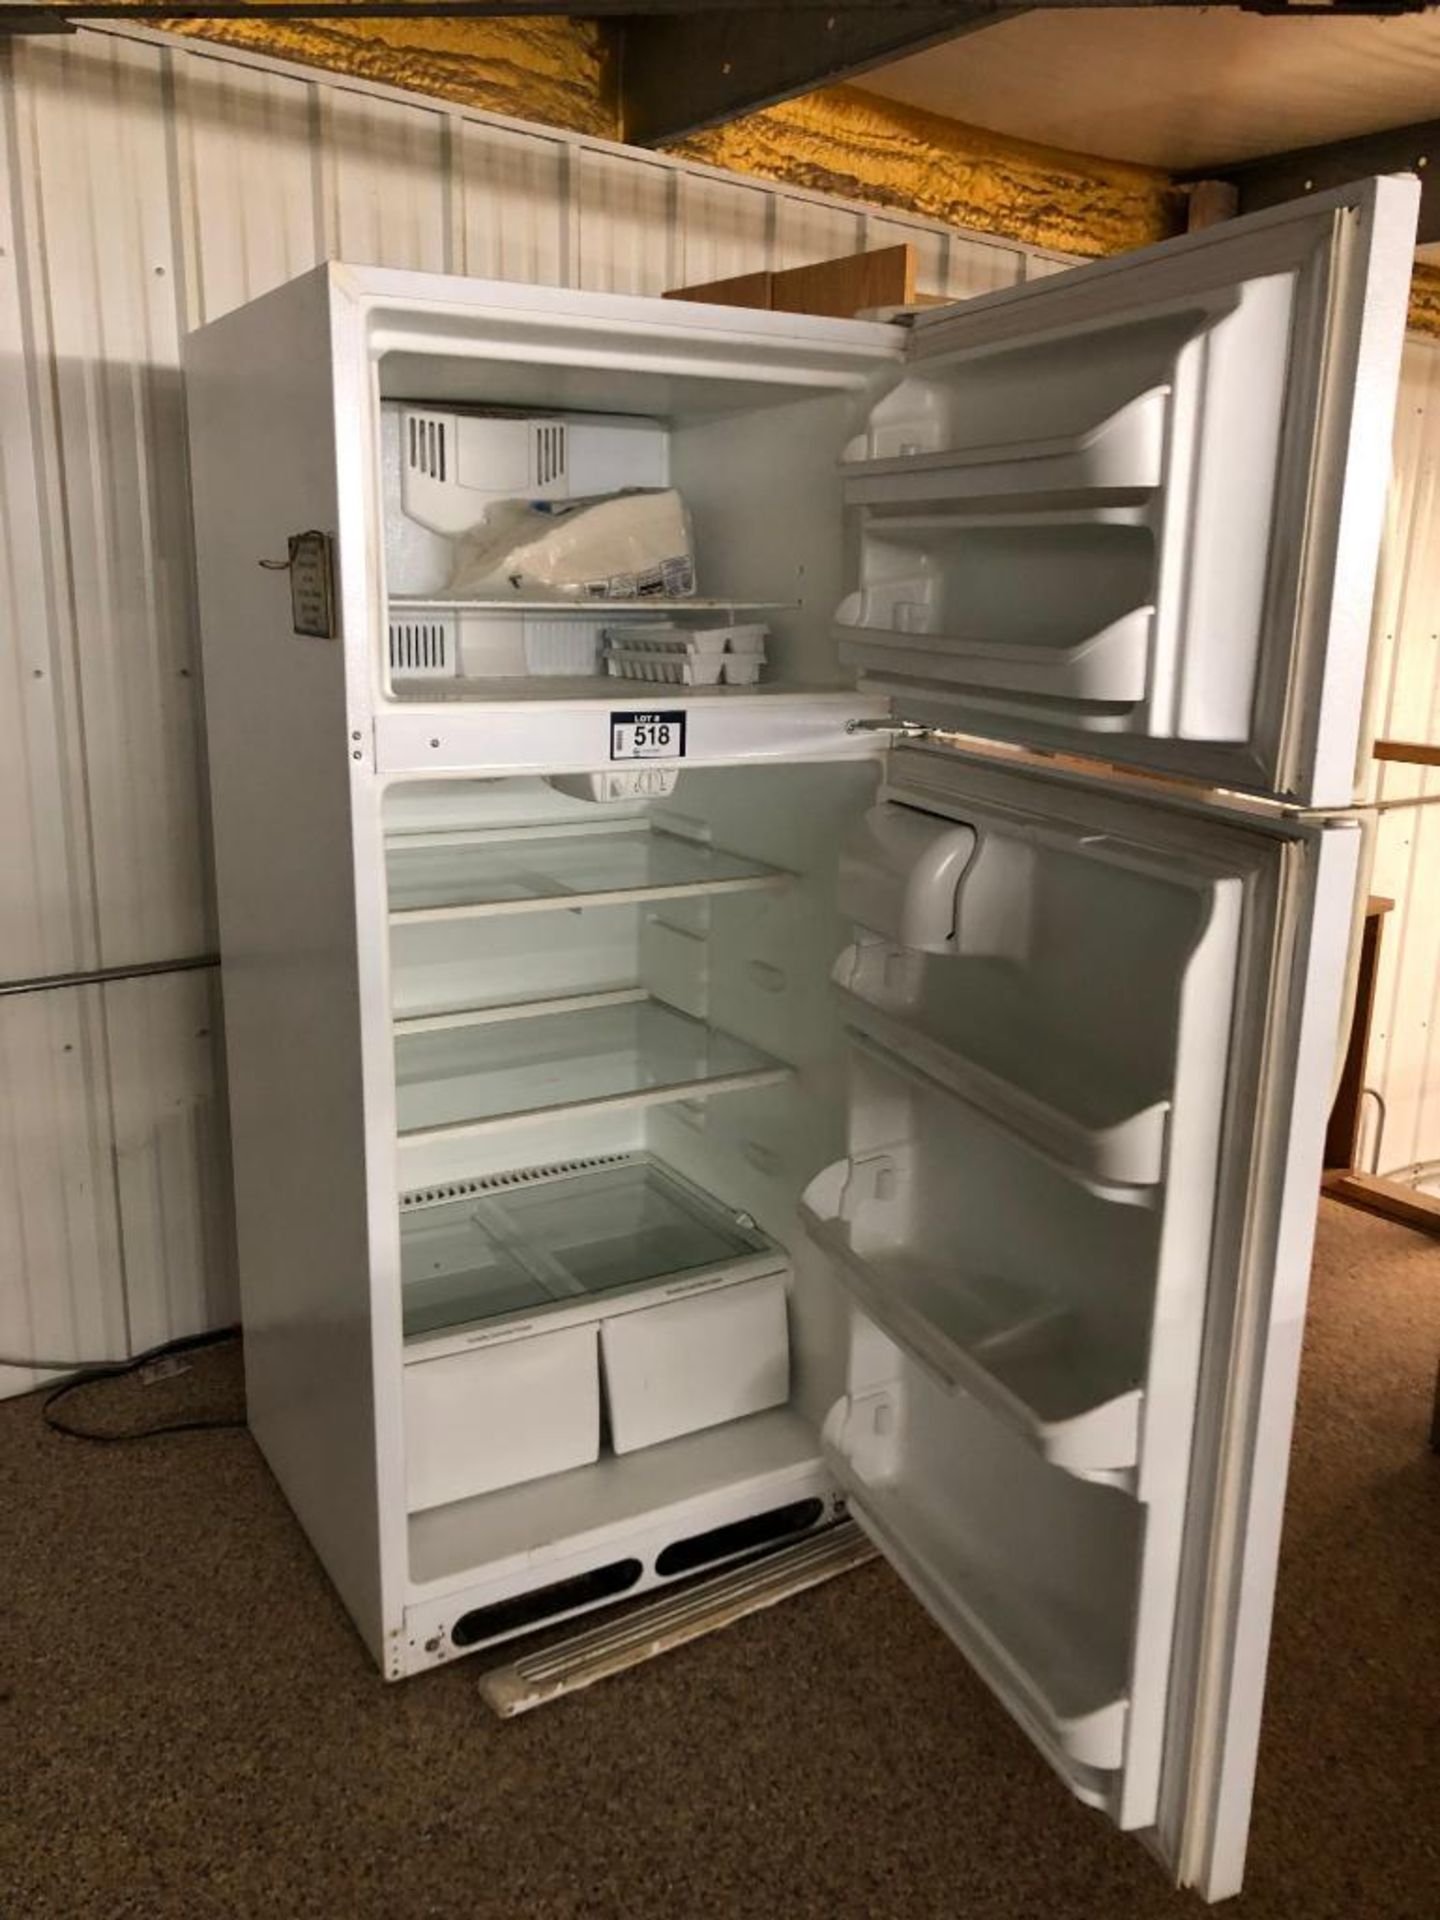 Sears 970-408121 Refrigerator - Image 2 of 3